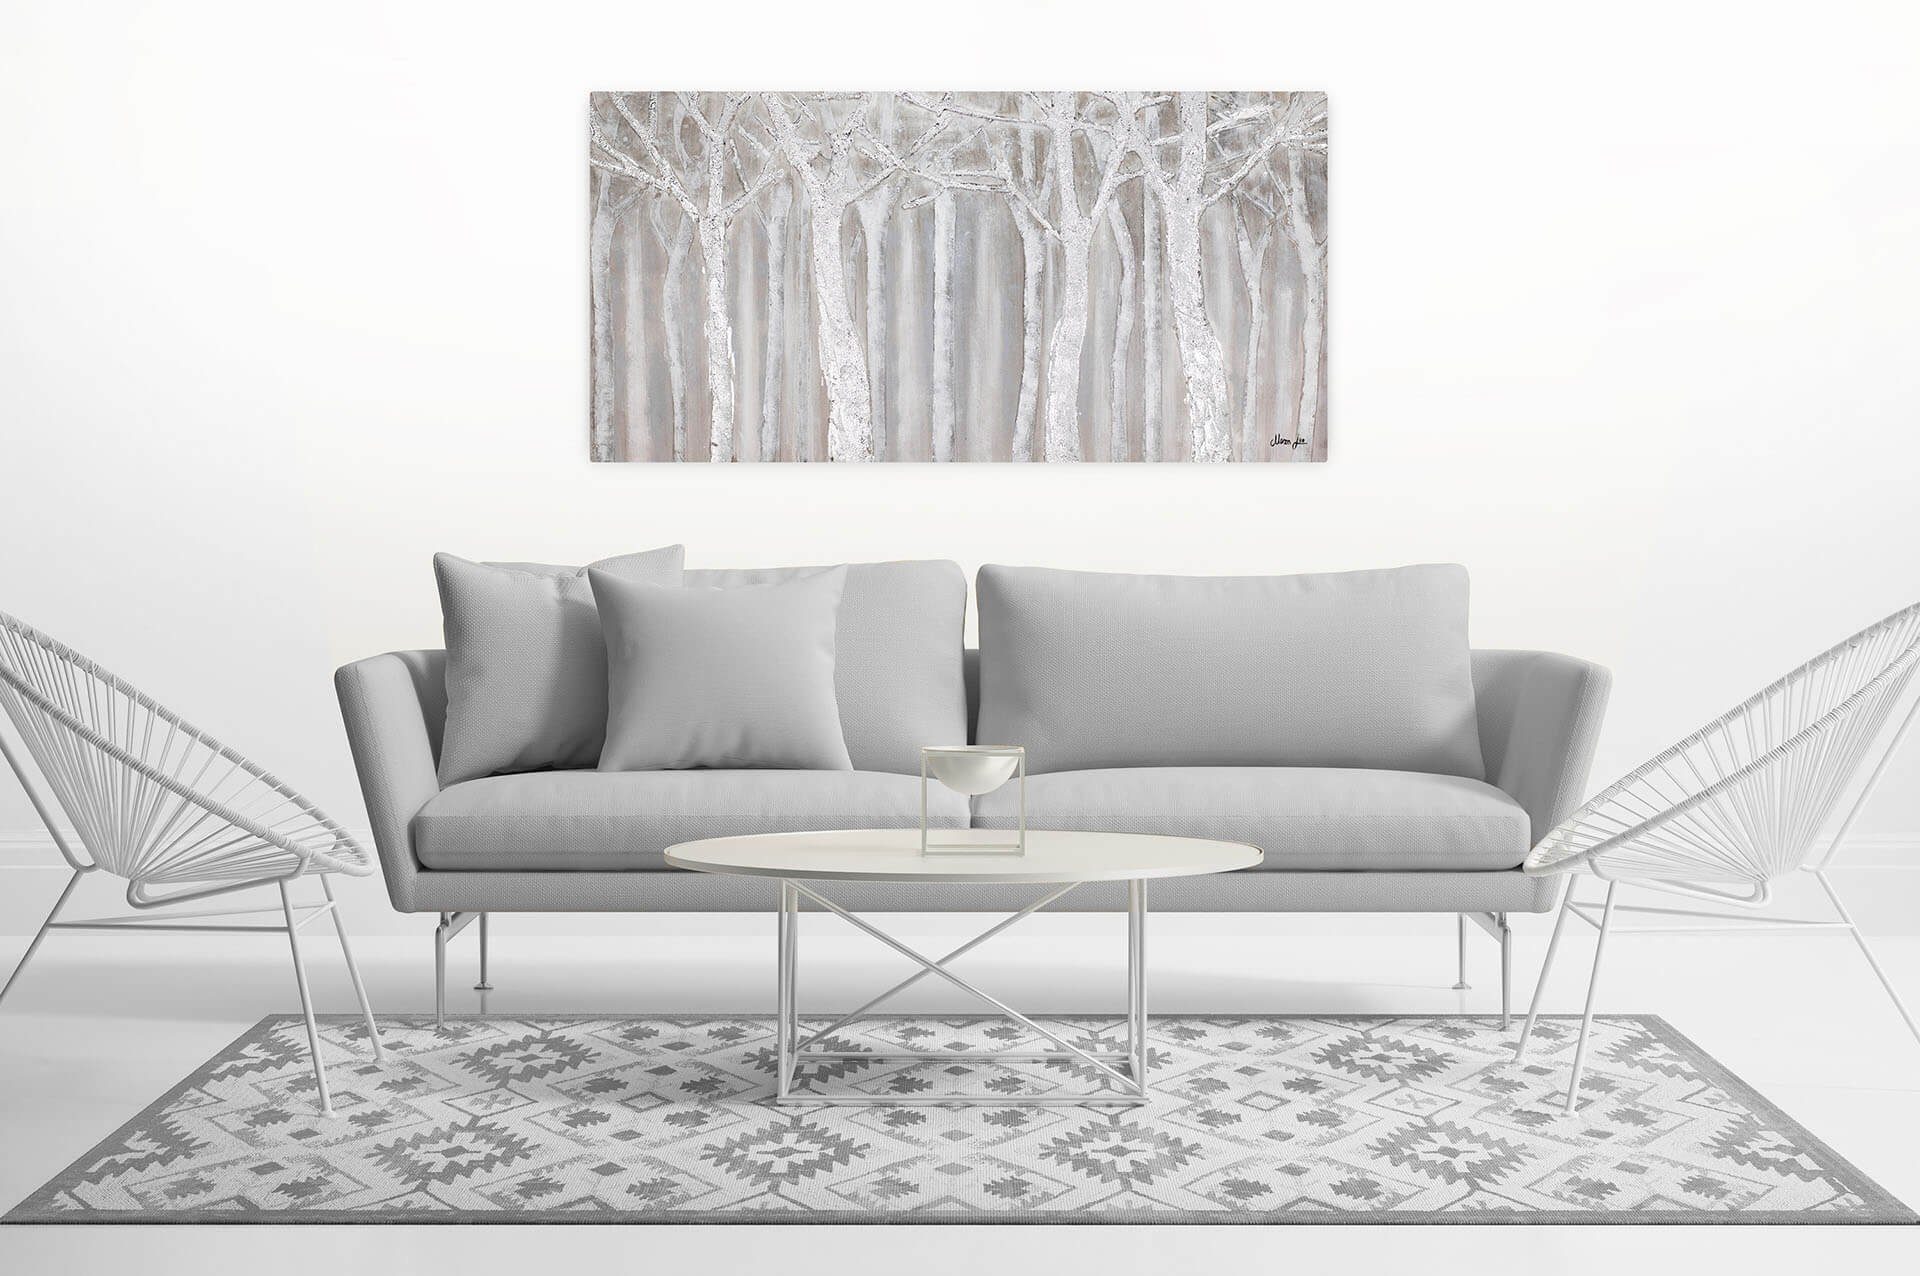 140x70 Leinwandbild Wohnzimmer Whispering 100% Gemälde Wandbild Trees cm, HANDGEMALT KUNSTLOFT